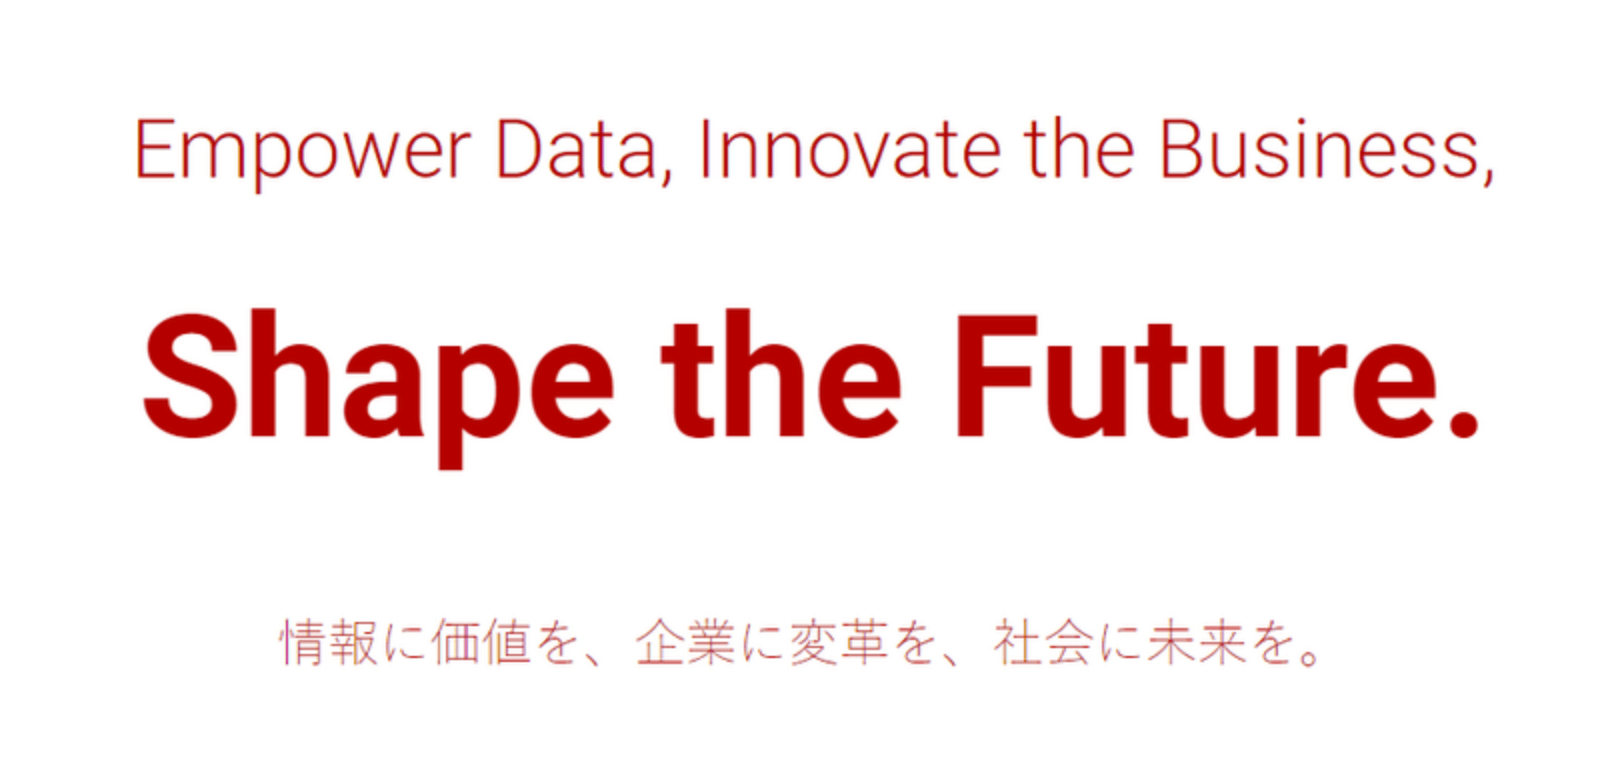 Empower Data, Innovate the Business, Shape the Future. 情報に価値を、企業に変革を、社会に未来を。